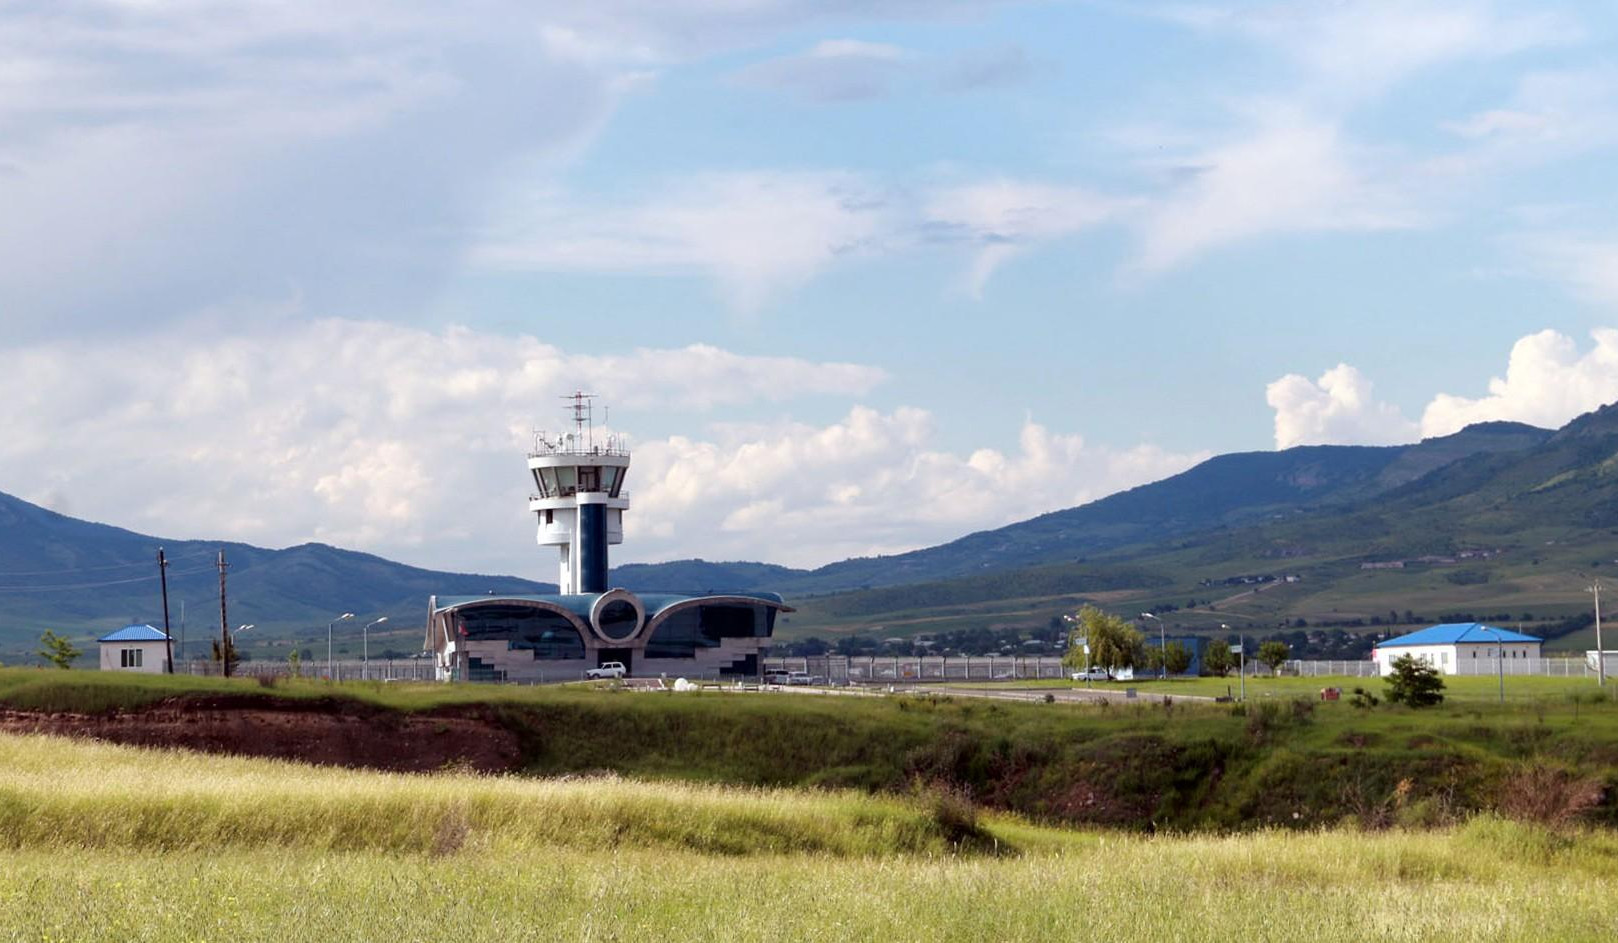 Азербайджан, обещающий безопасность прав народа Арцаха, уже 30 лет держит Степанакертский аэропорт закрытым: Омбудсмен Арцаха